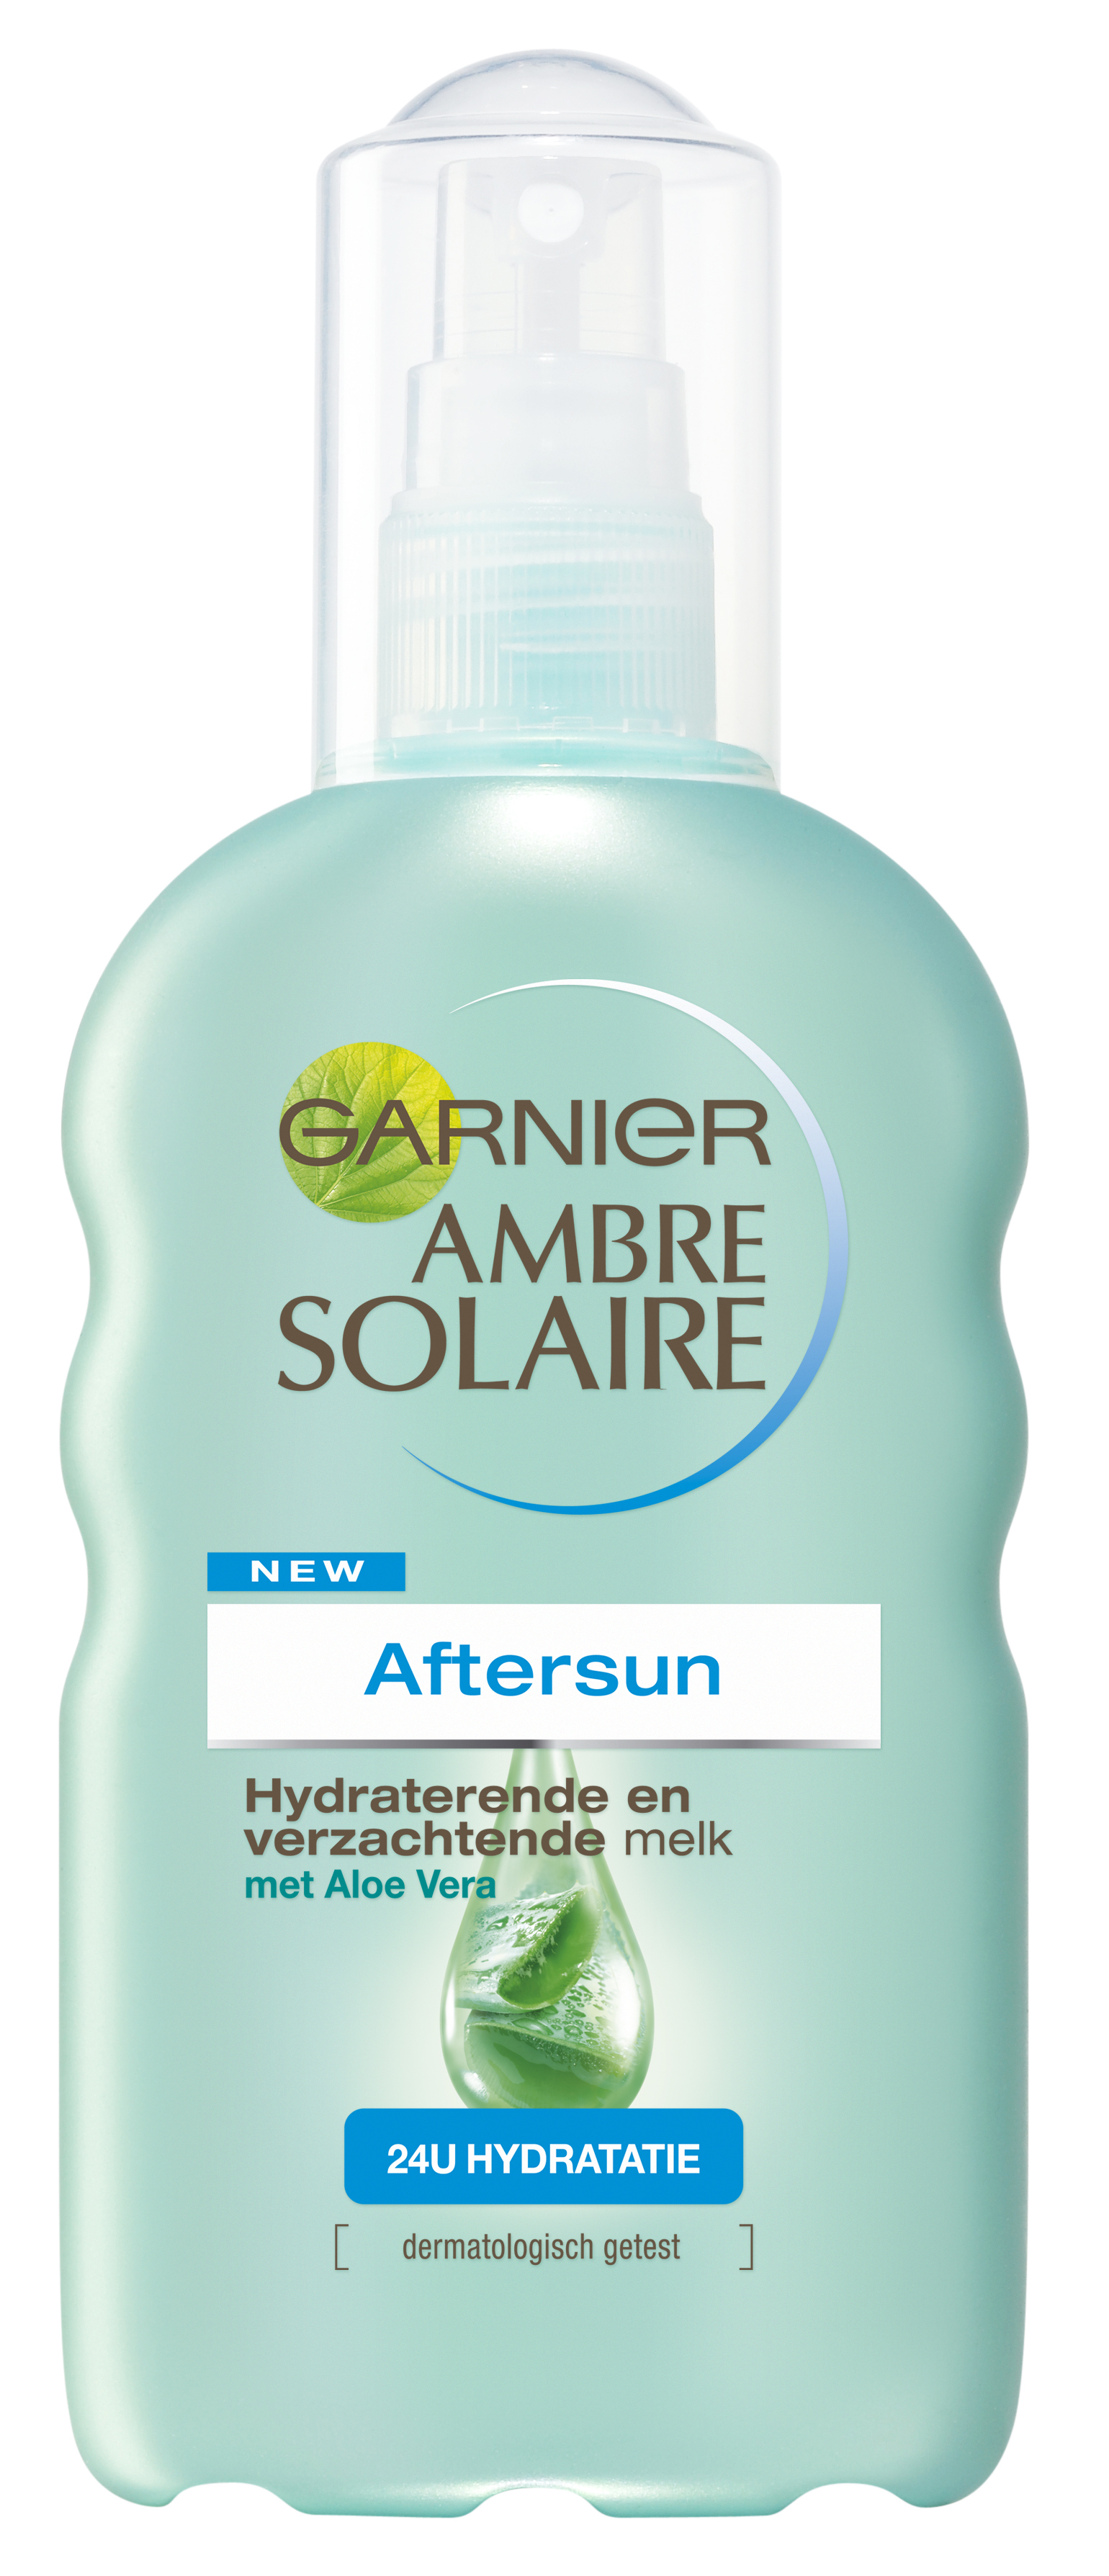 Garnier Ambre Solaire Aftersun Spray - 200 ml - Aftersun spray